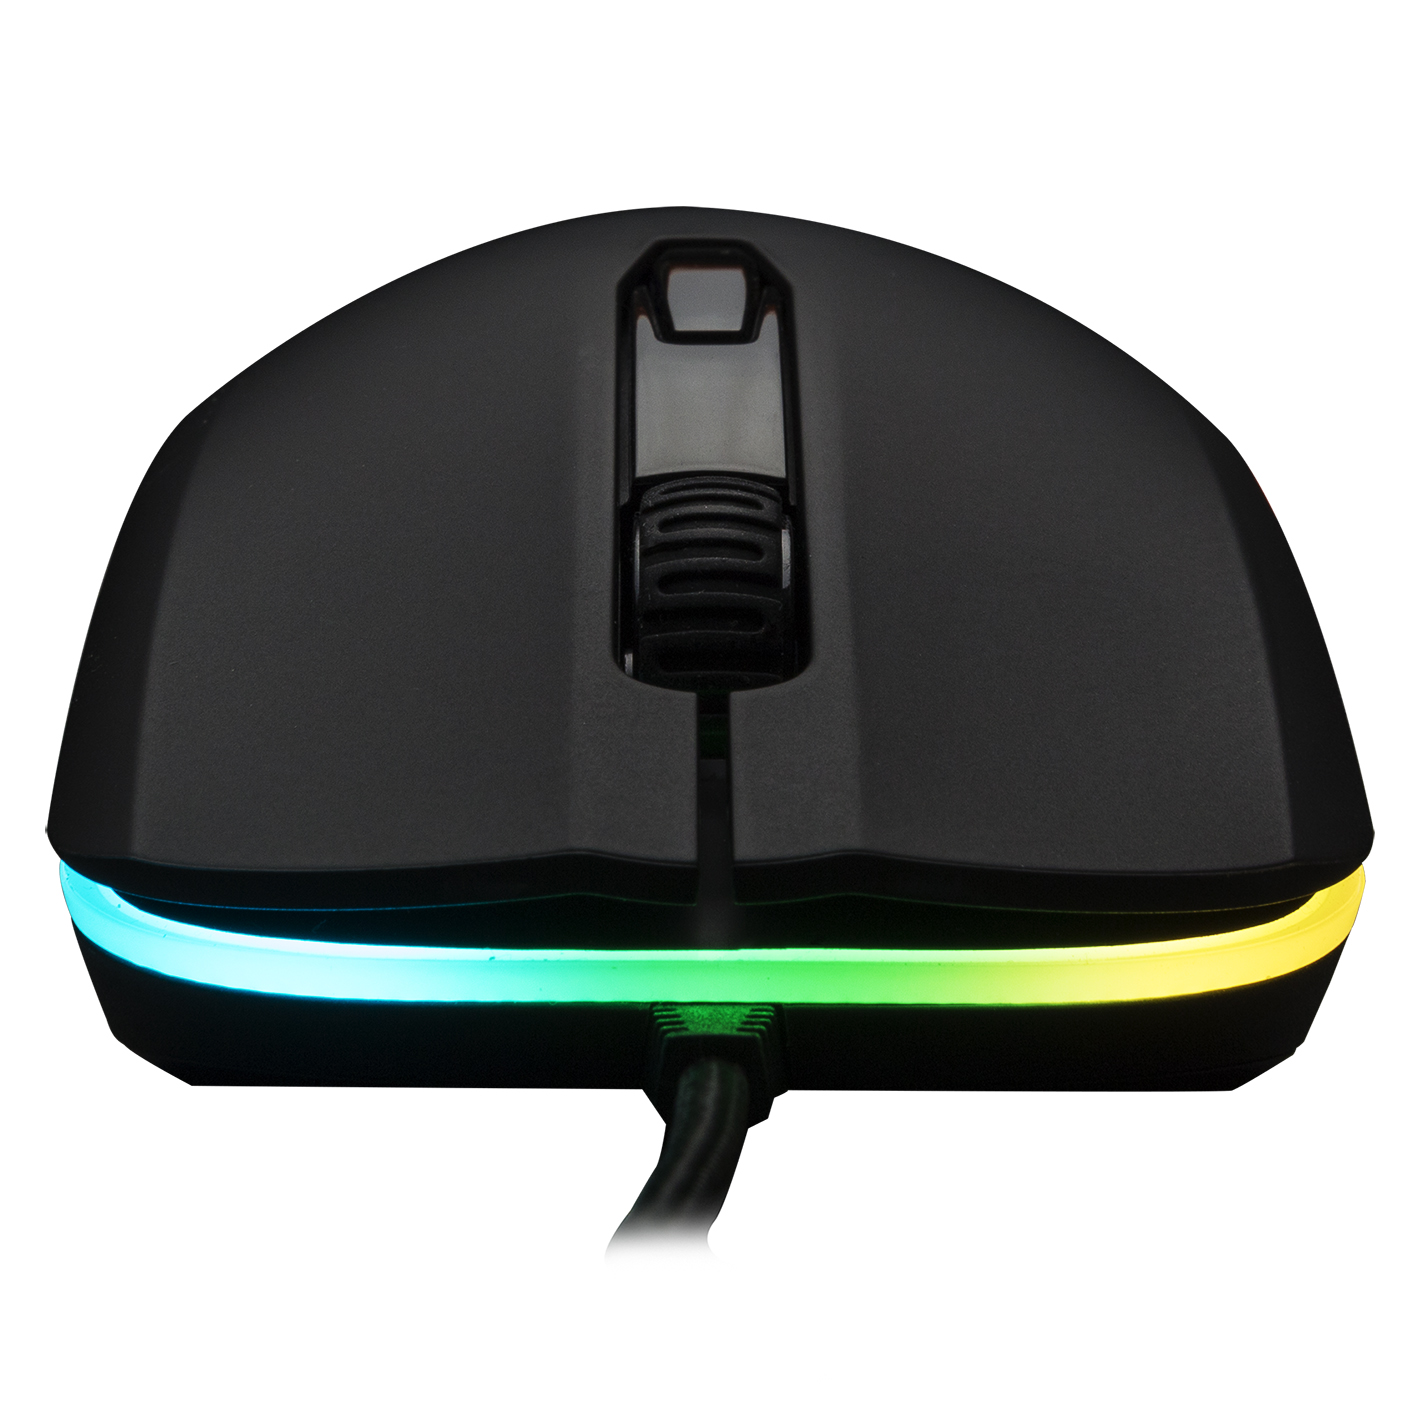 HYPERX Pulsefire Schwarz Surge™ Maus, Gaming RGB